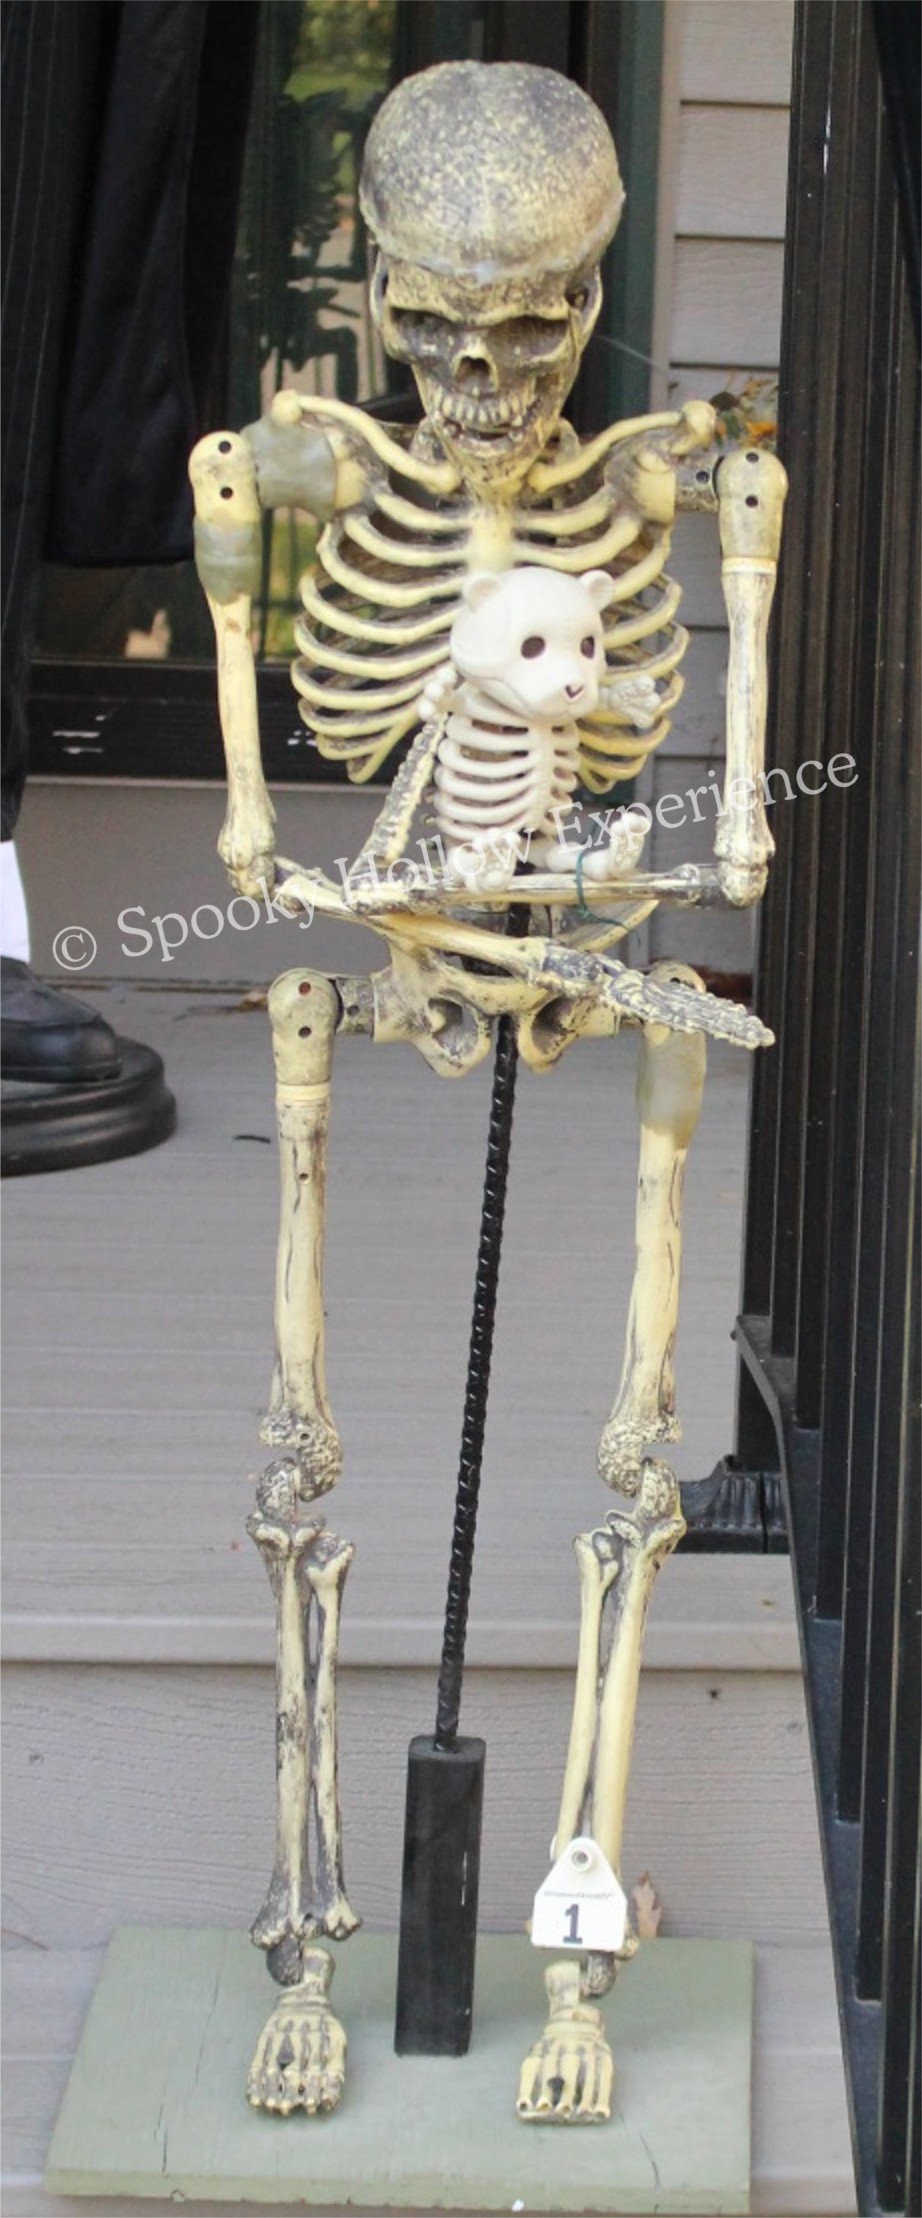 Spooky Hollow Experience copyright Bones